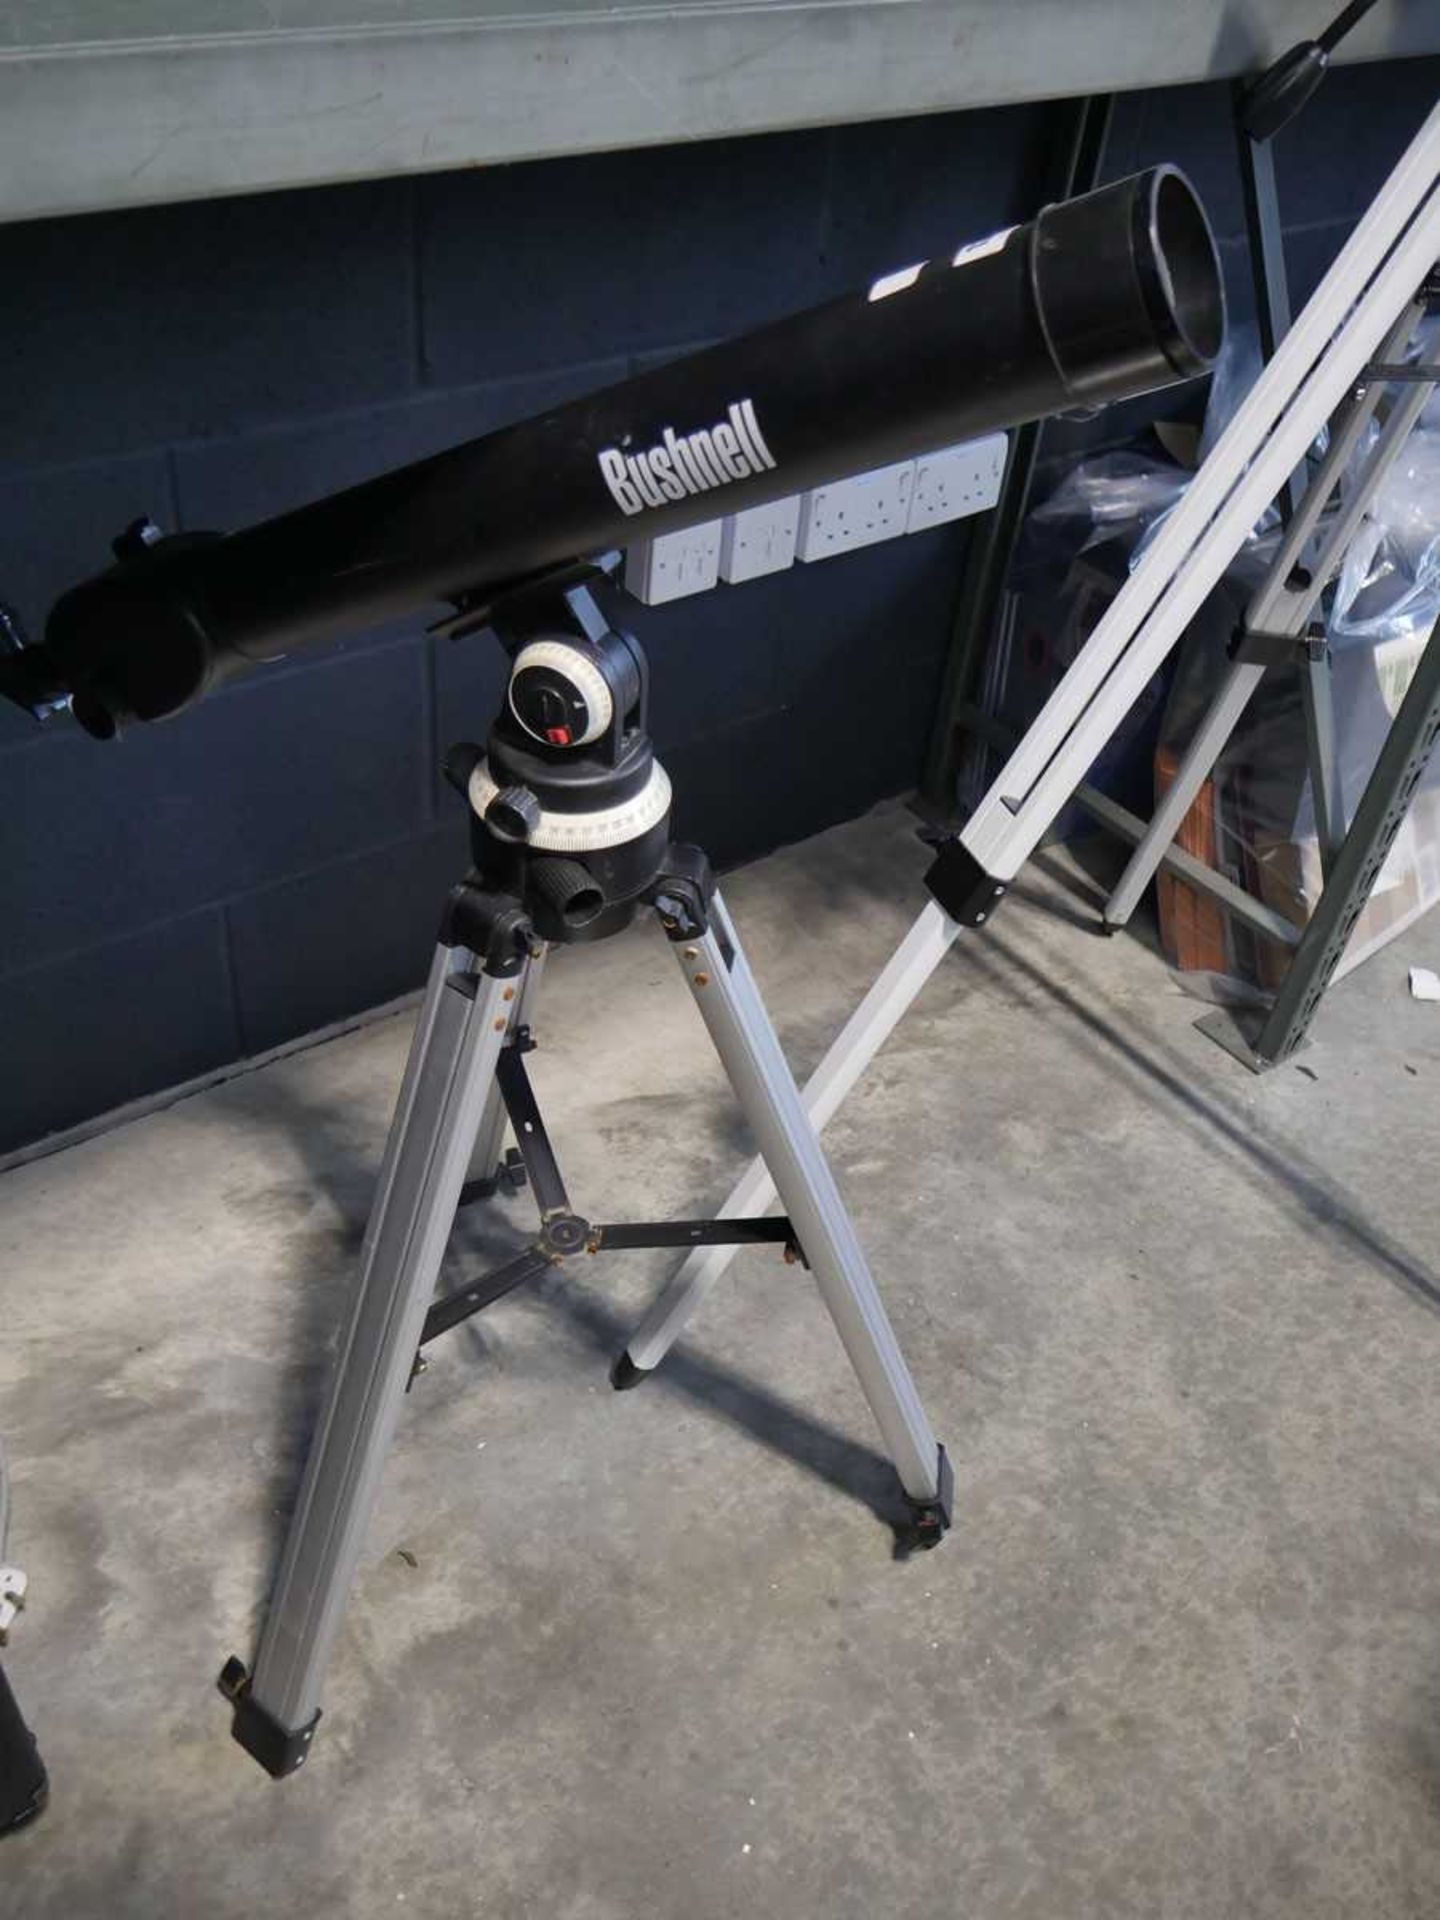 Bushnell telescope on tripod